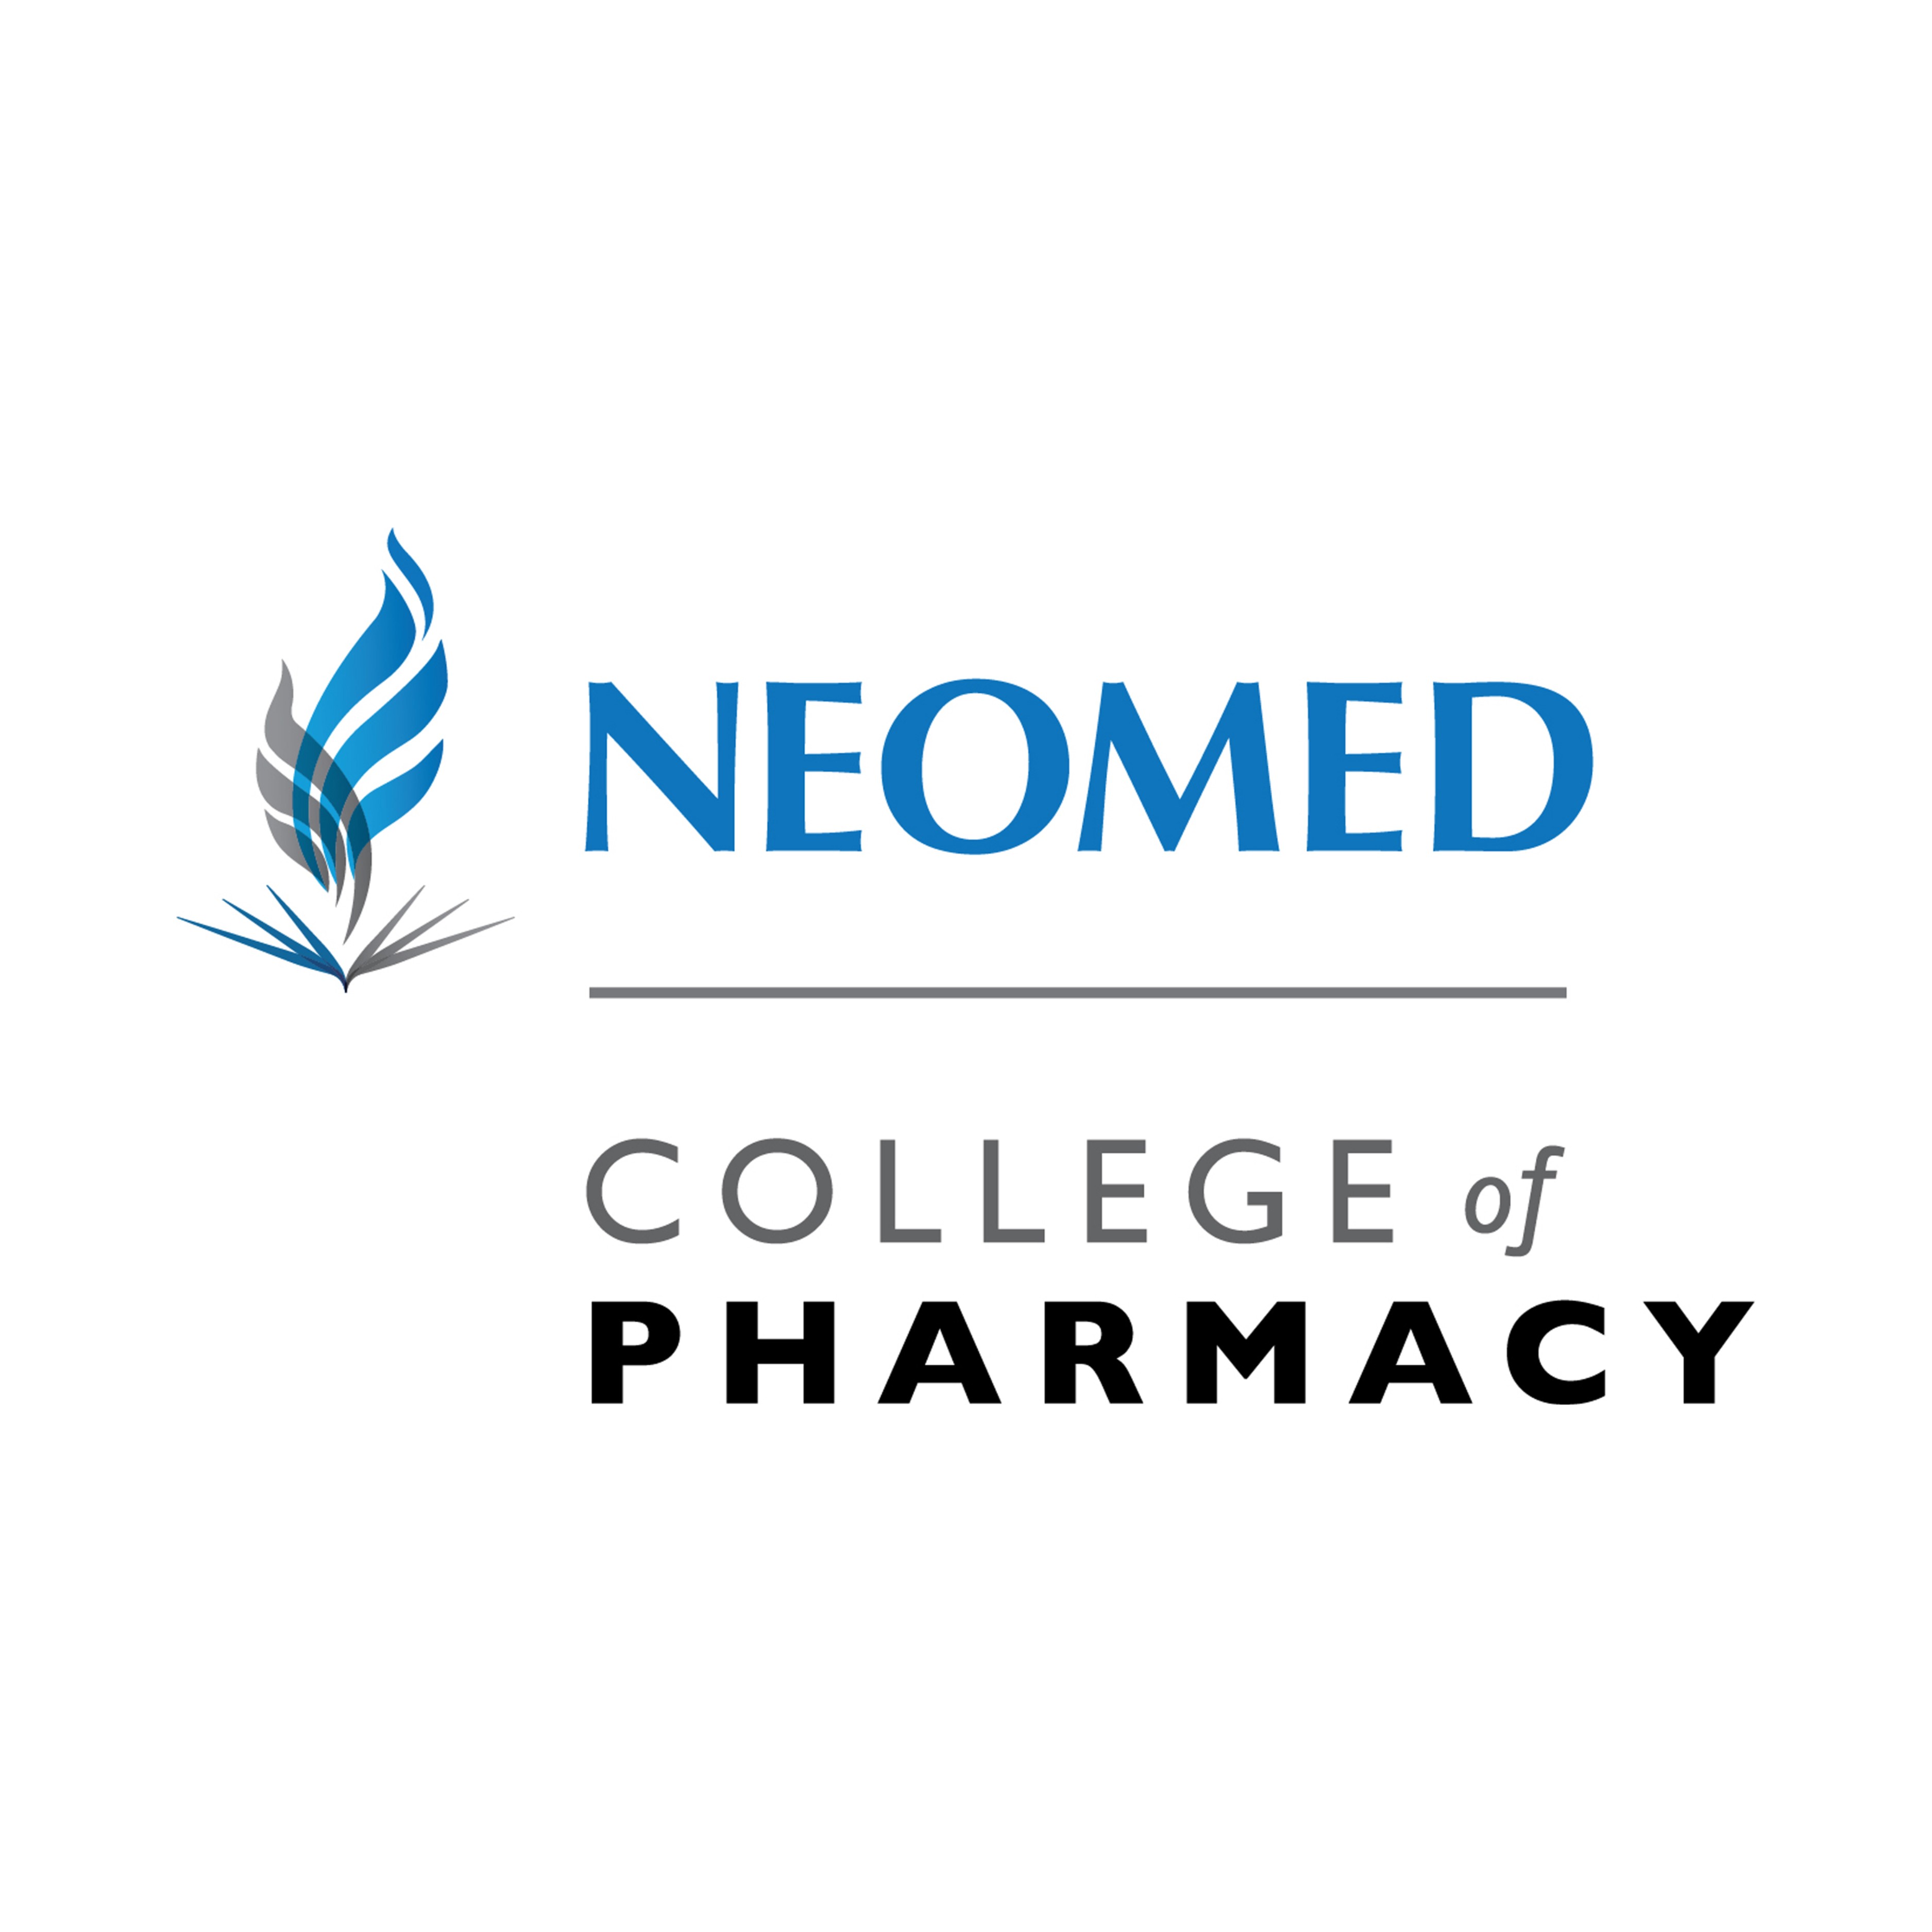 NEOMED College of Pharmacy CareeRXploration